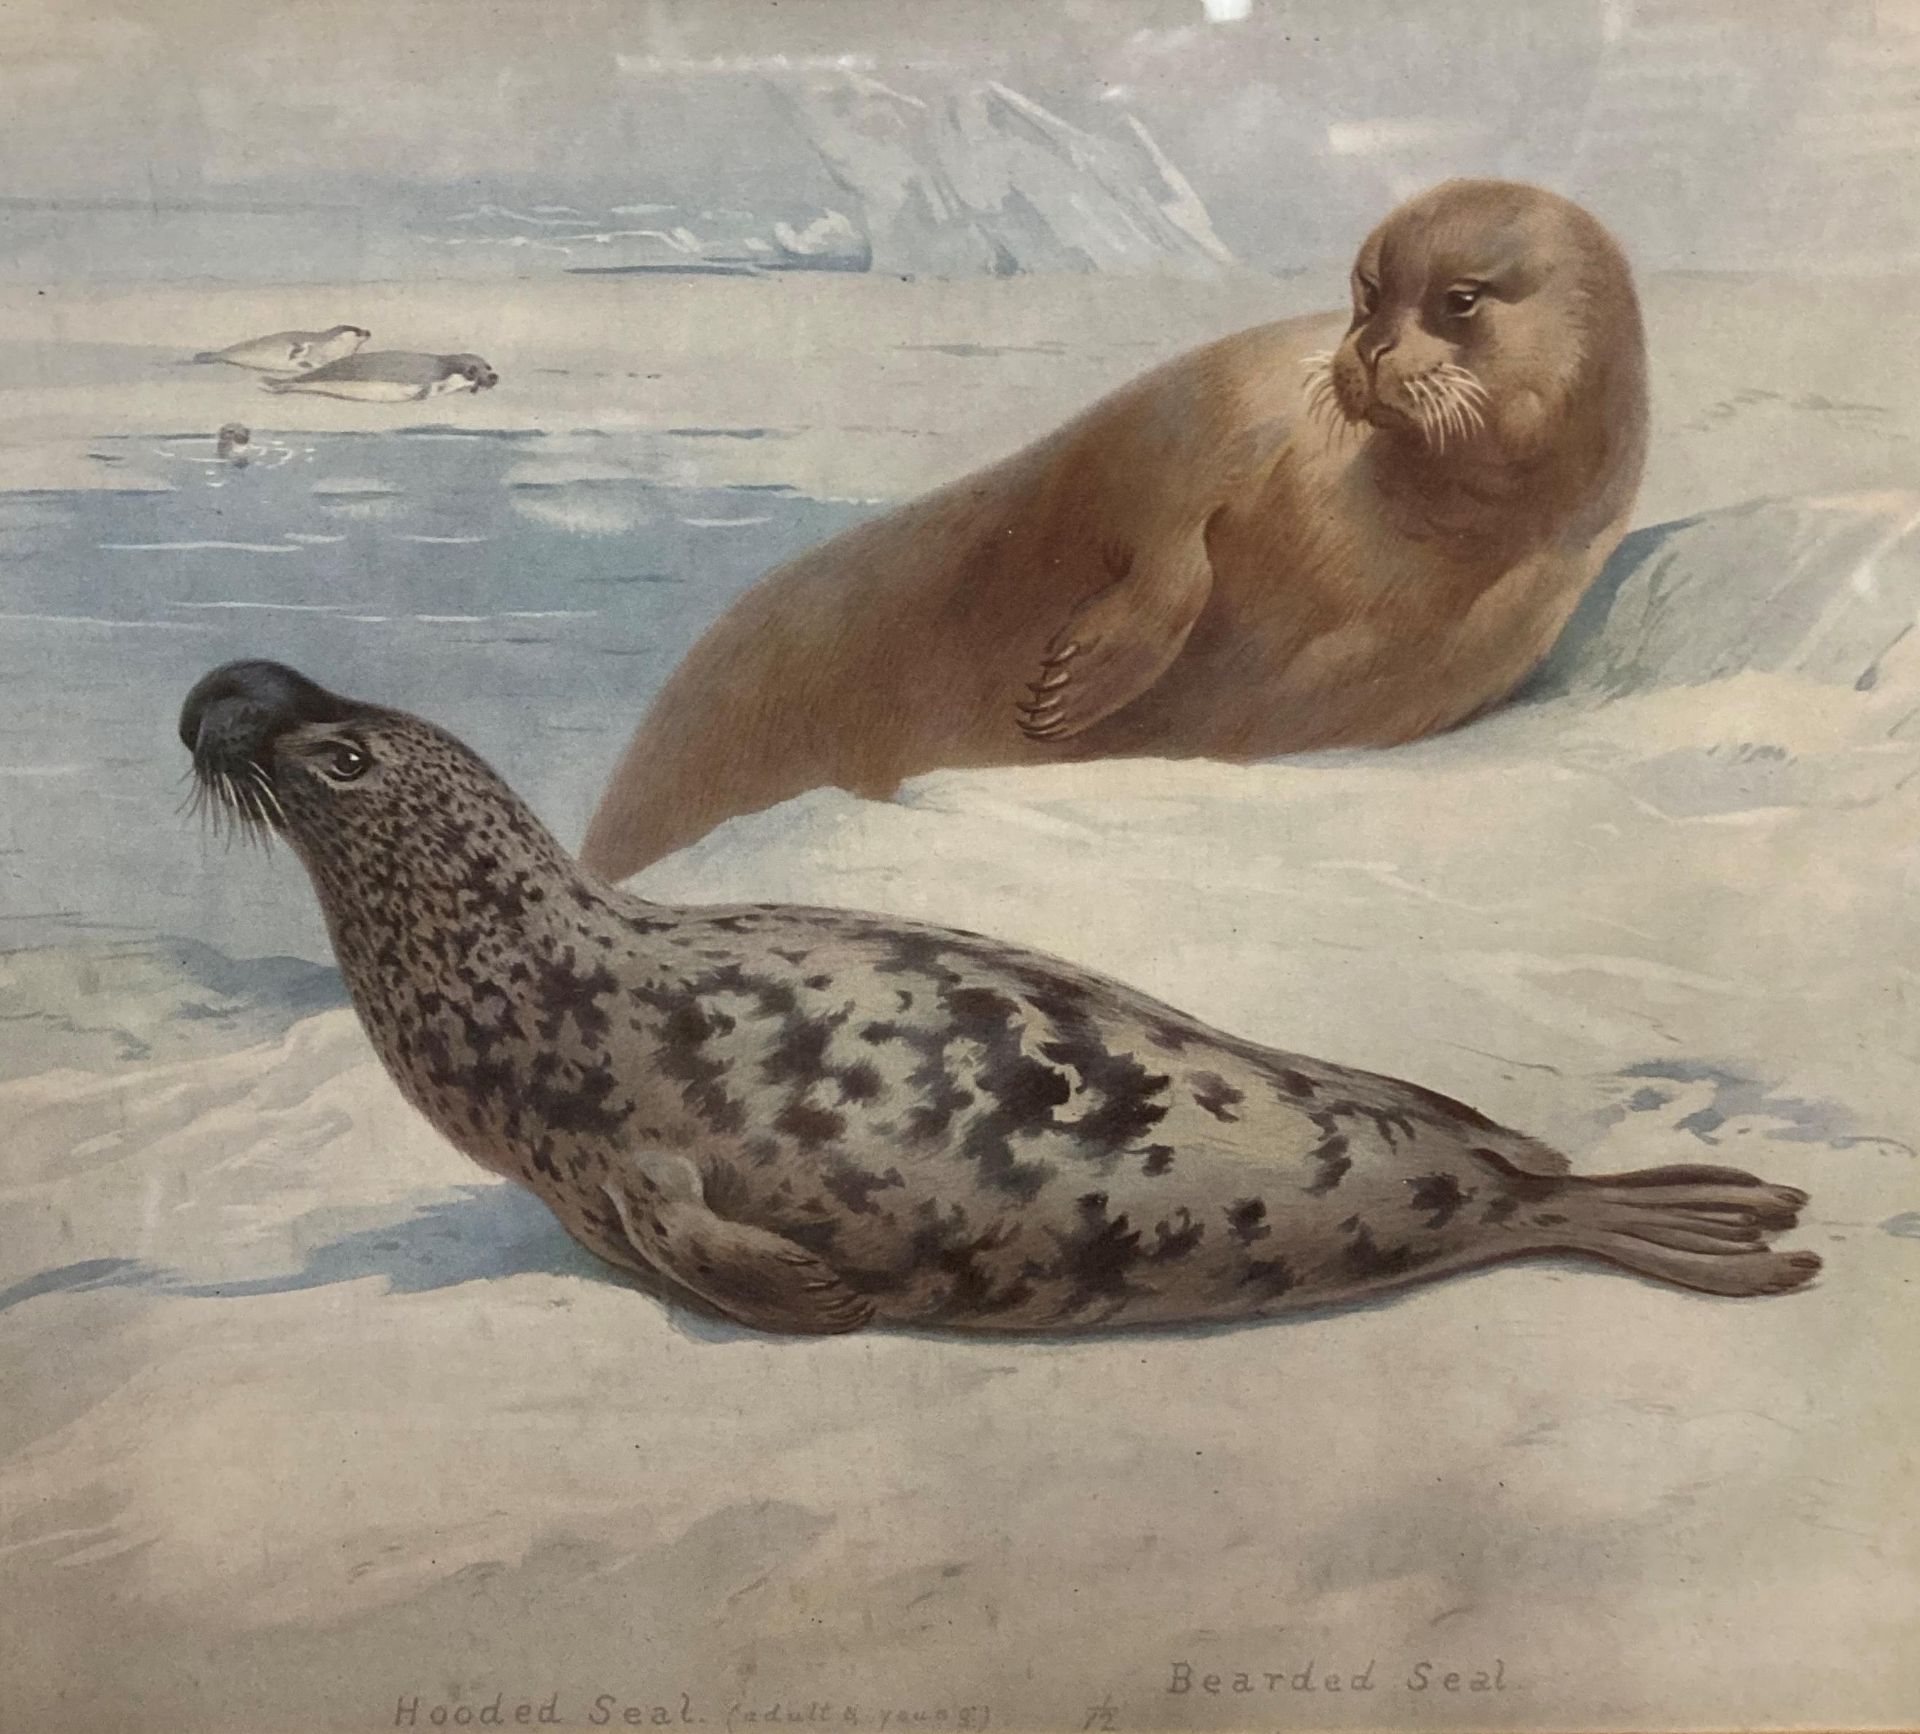 Ornate framed print of seals - 'Hooded Seal & Bearded Seal' 22cm x 27cm (Saleroom location: N06) - Image 2 of 3